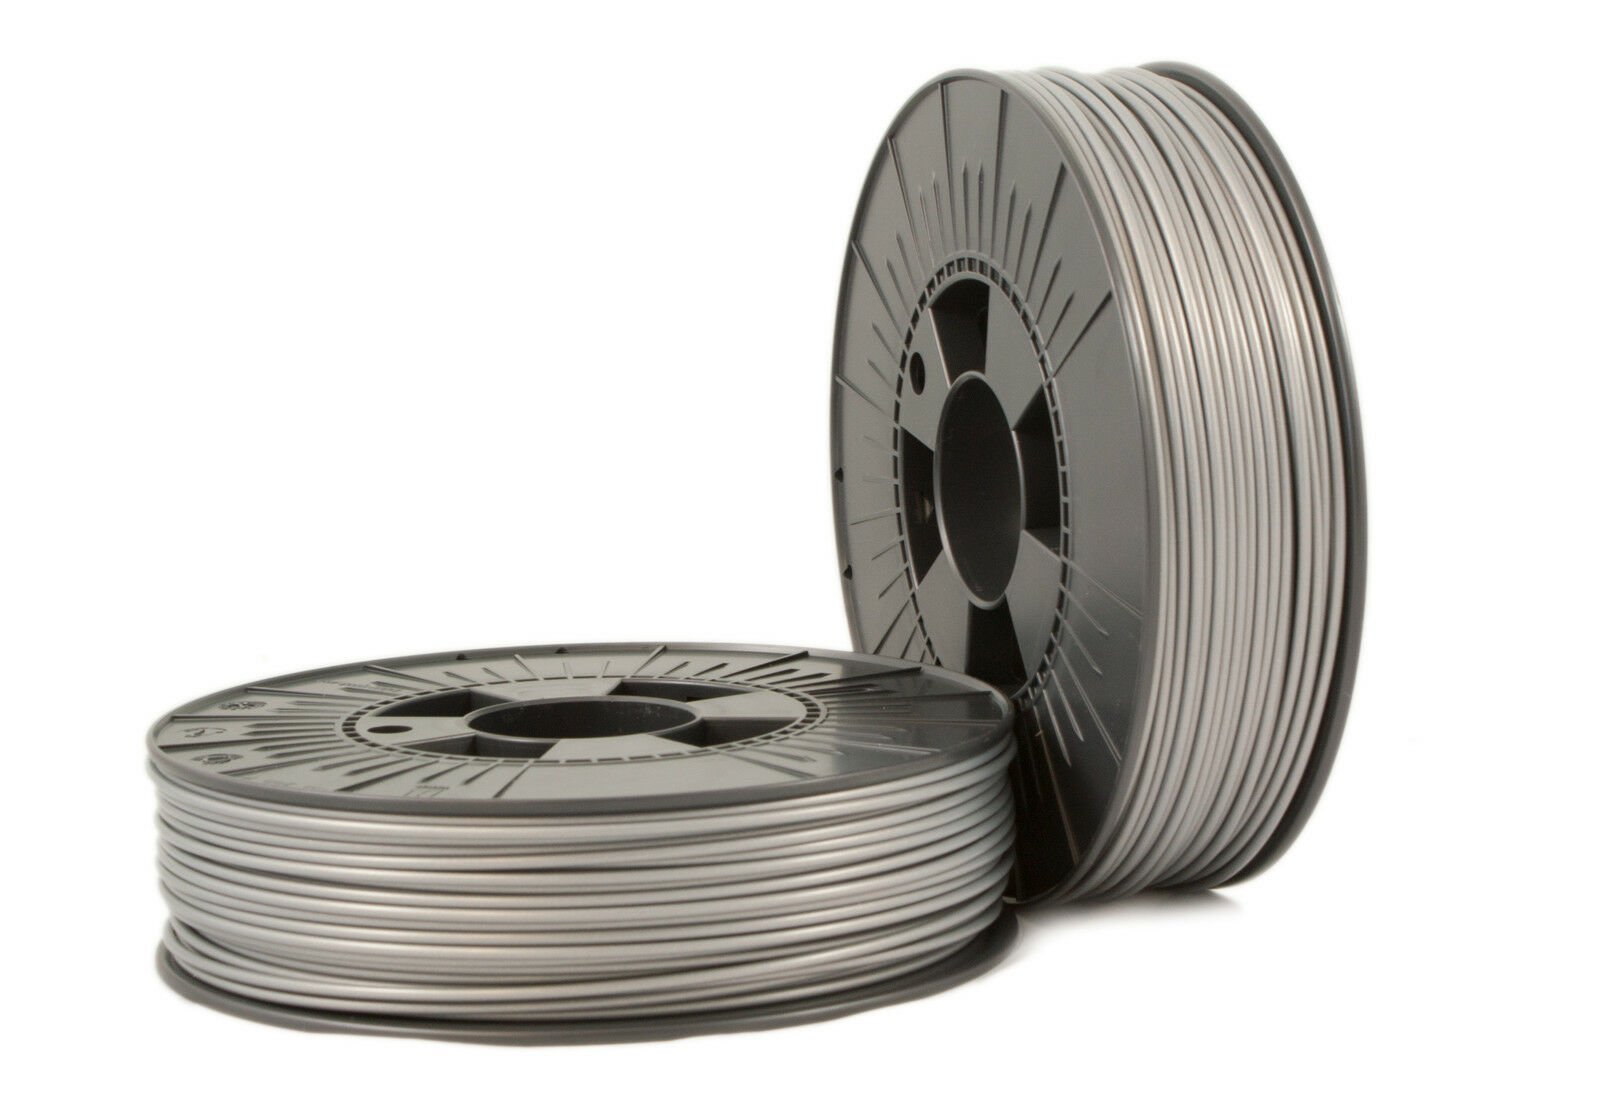 € 49,27 / Kilogram Abs-x 2,85mm Silver Ca. Ral 9006 0,75kg - 3d Filament Supplie